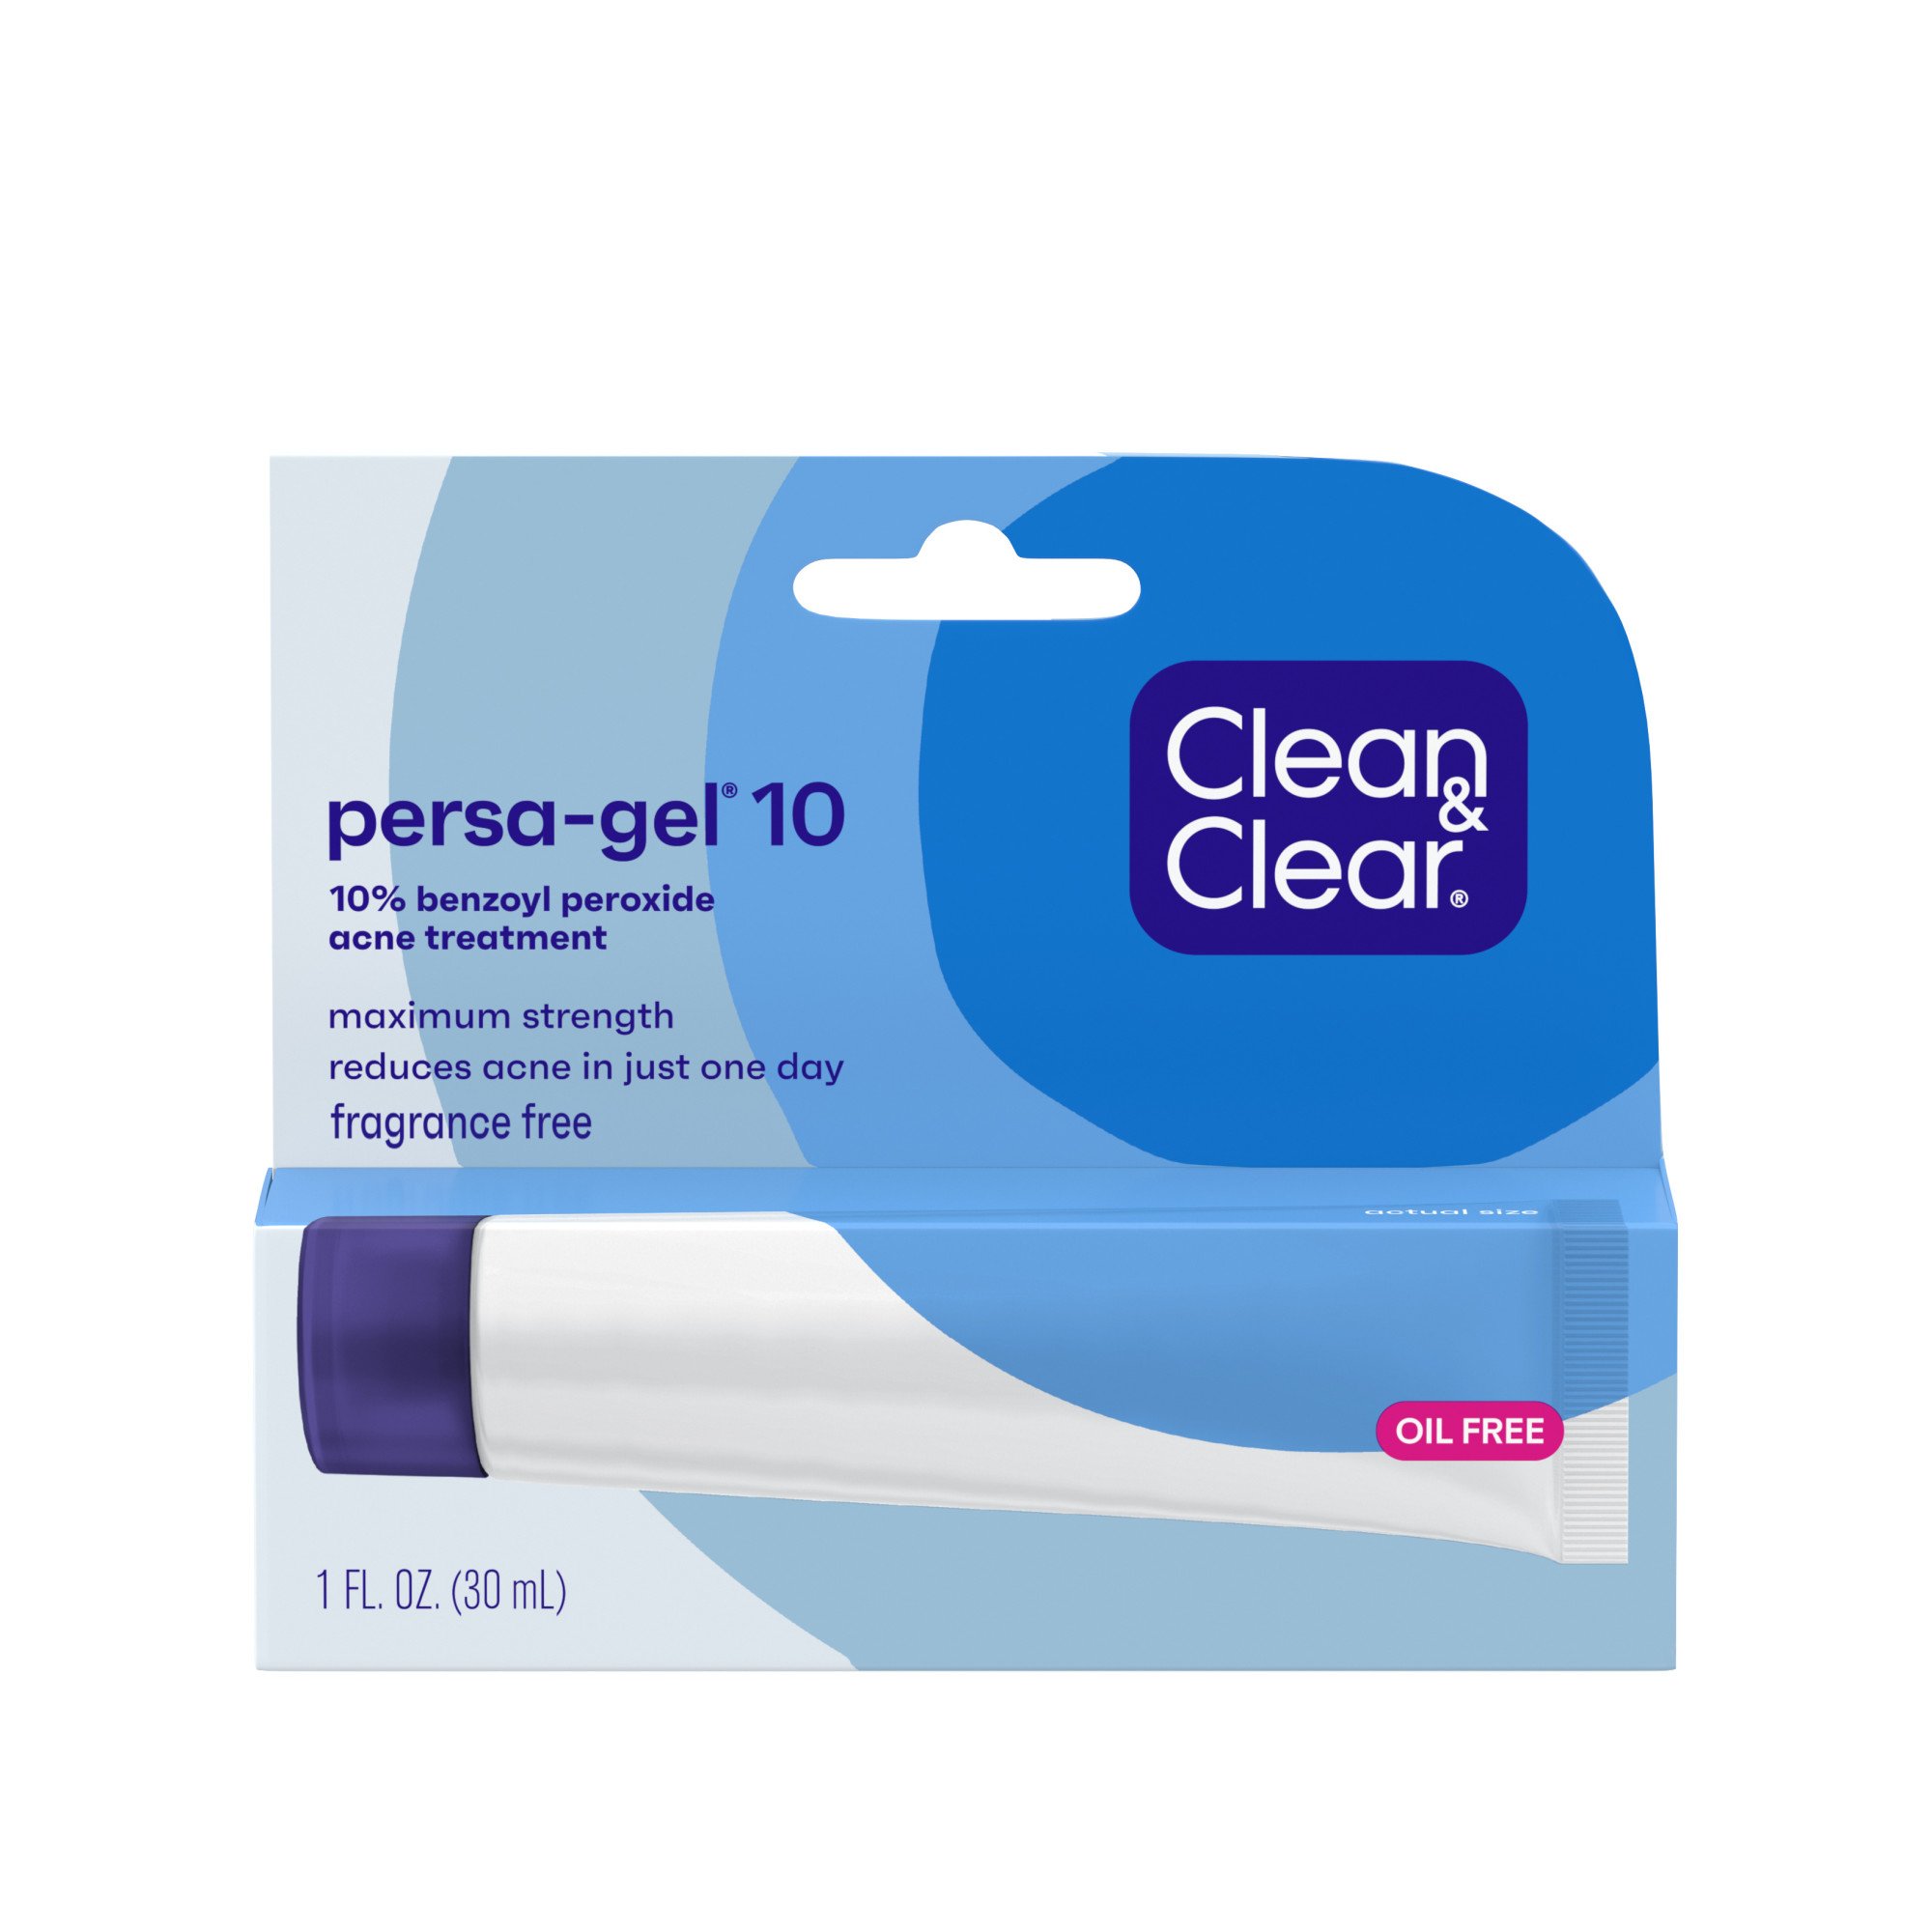 Clean & Clear Advantage Acne Spot Treatment - 0.75 fl oz tube